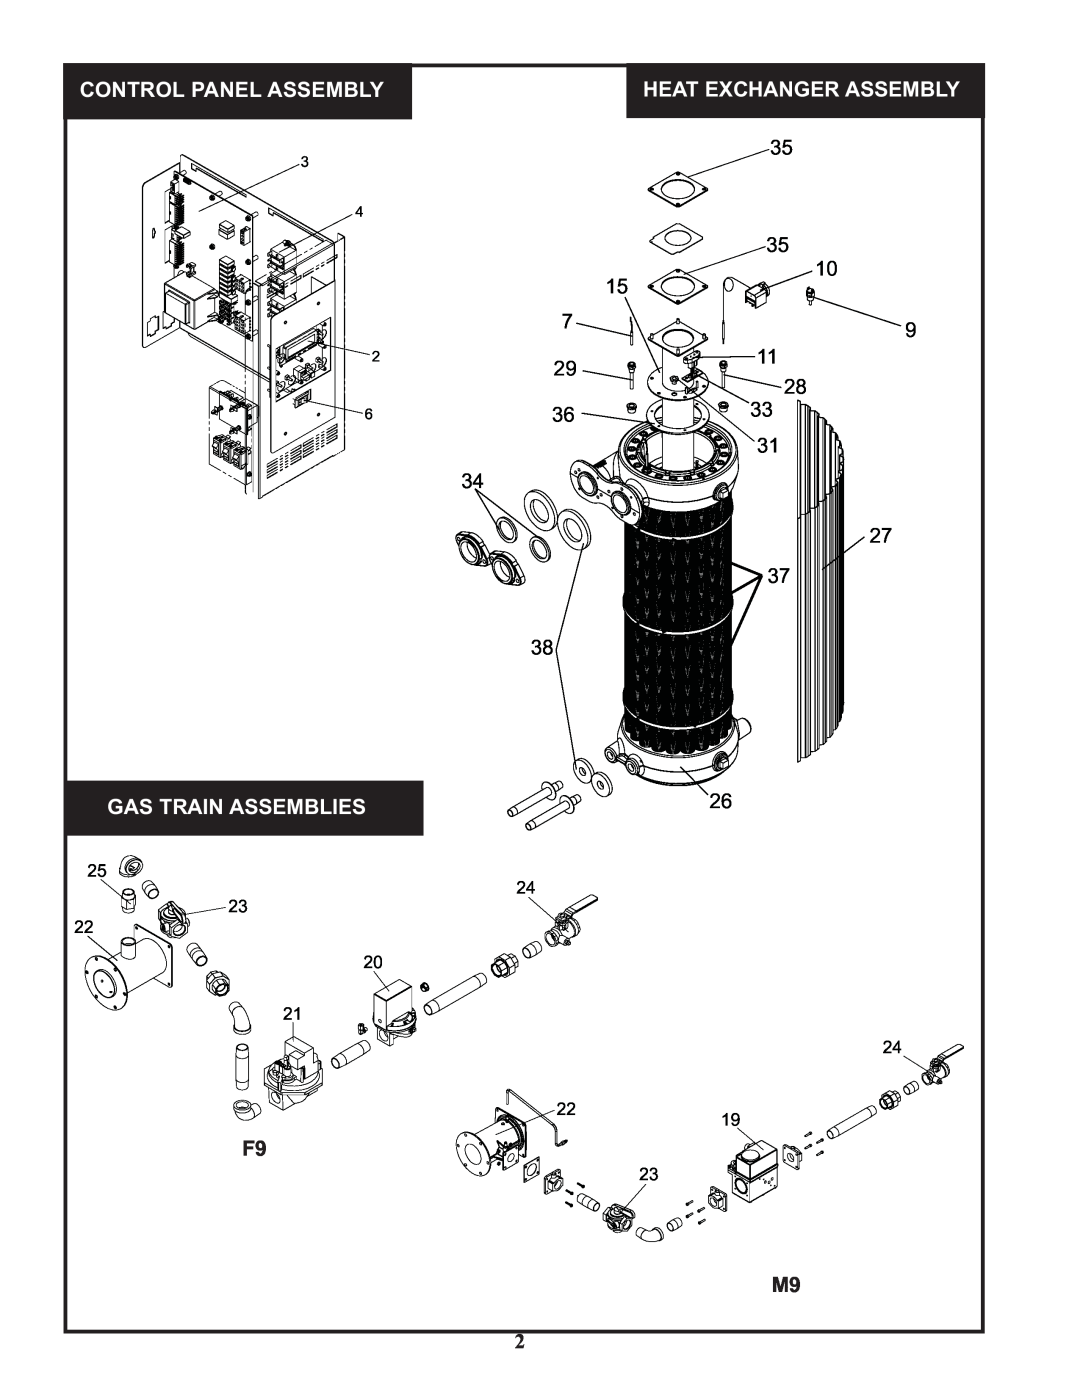 Lochinvar PB/PF 502 THRU 1302 manual Control Panel Assembly, Gas Train Assemblies, Heat Exchanger Assembly 